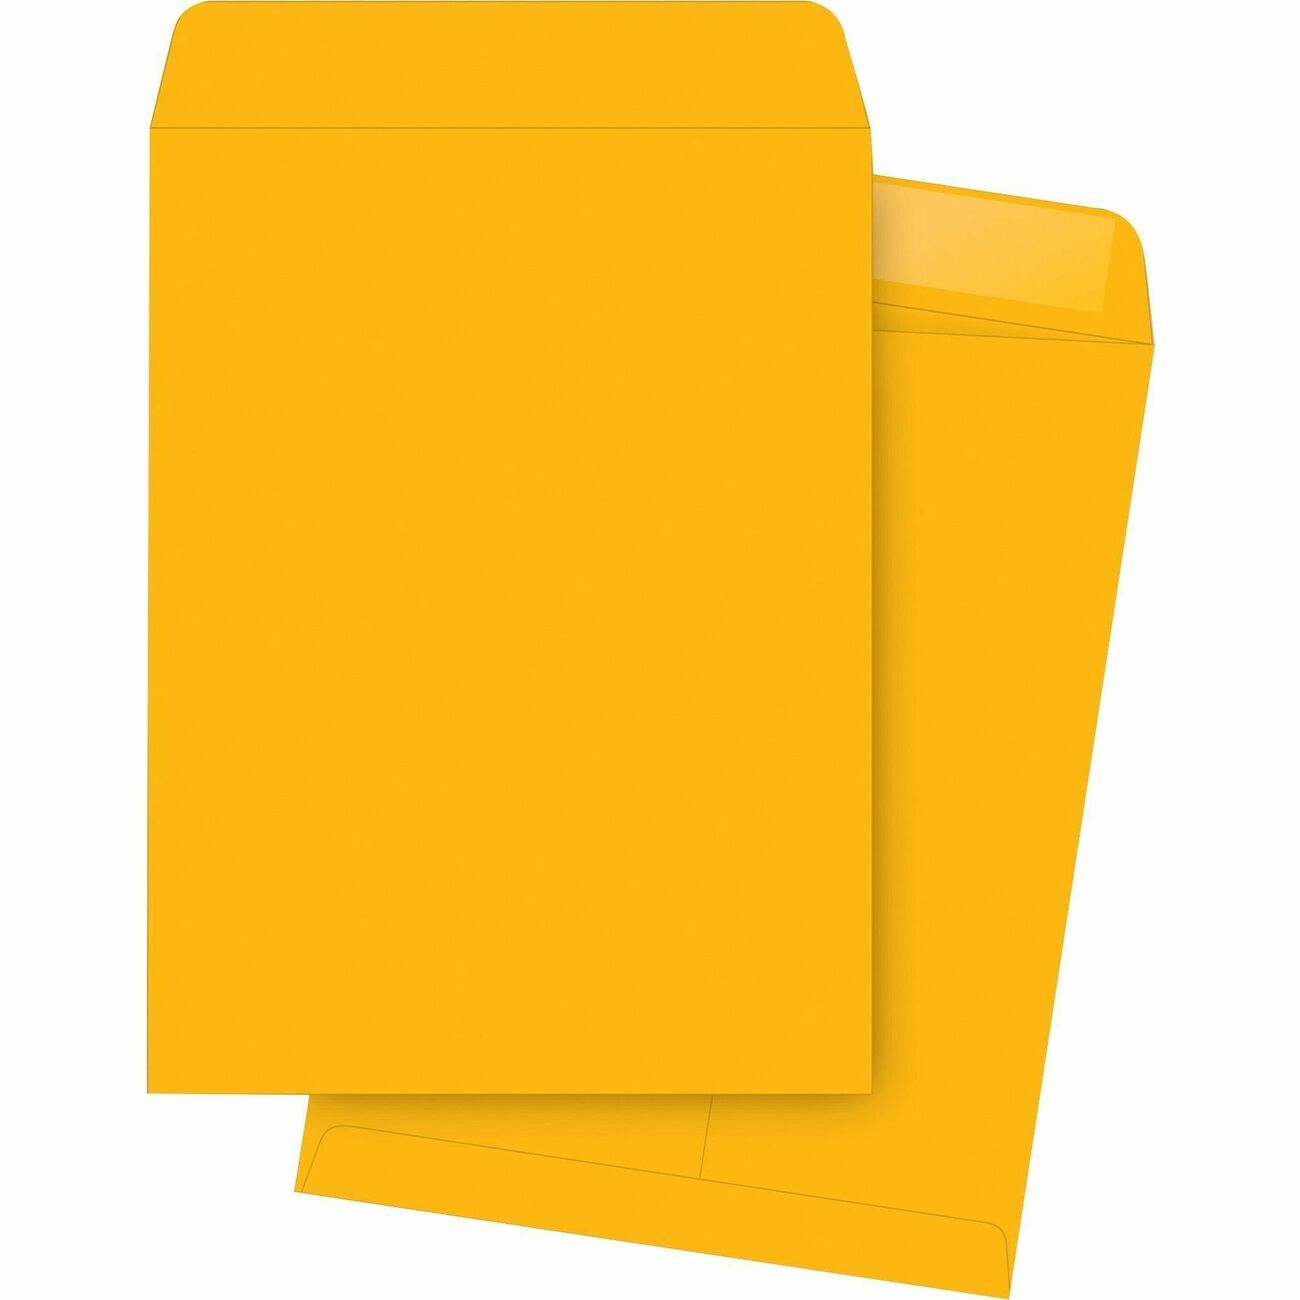 libreoffice envelope template folder